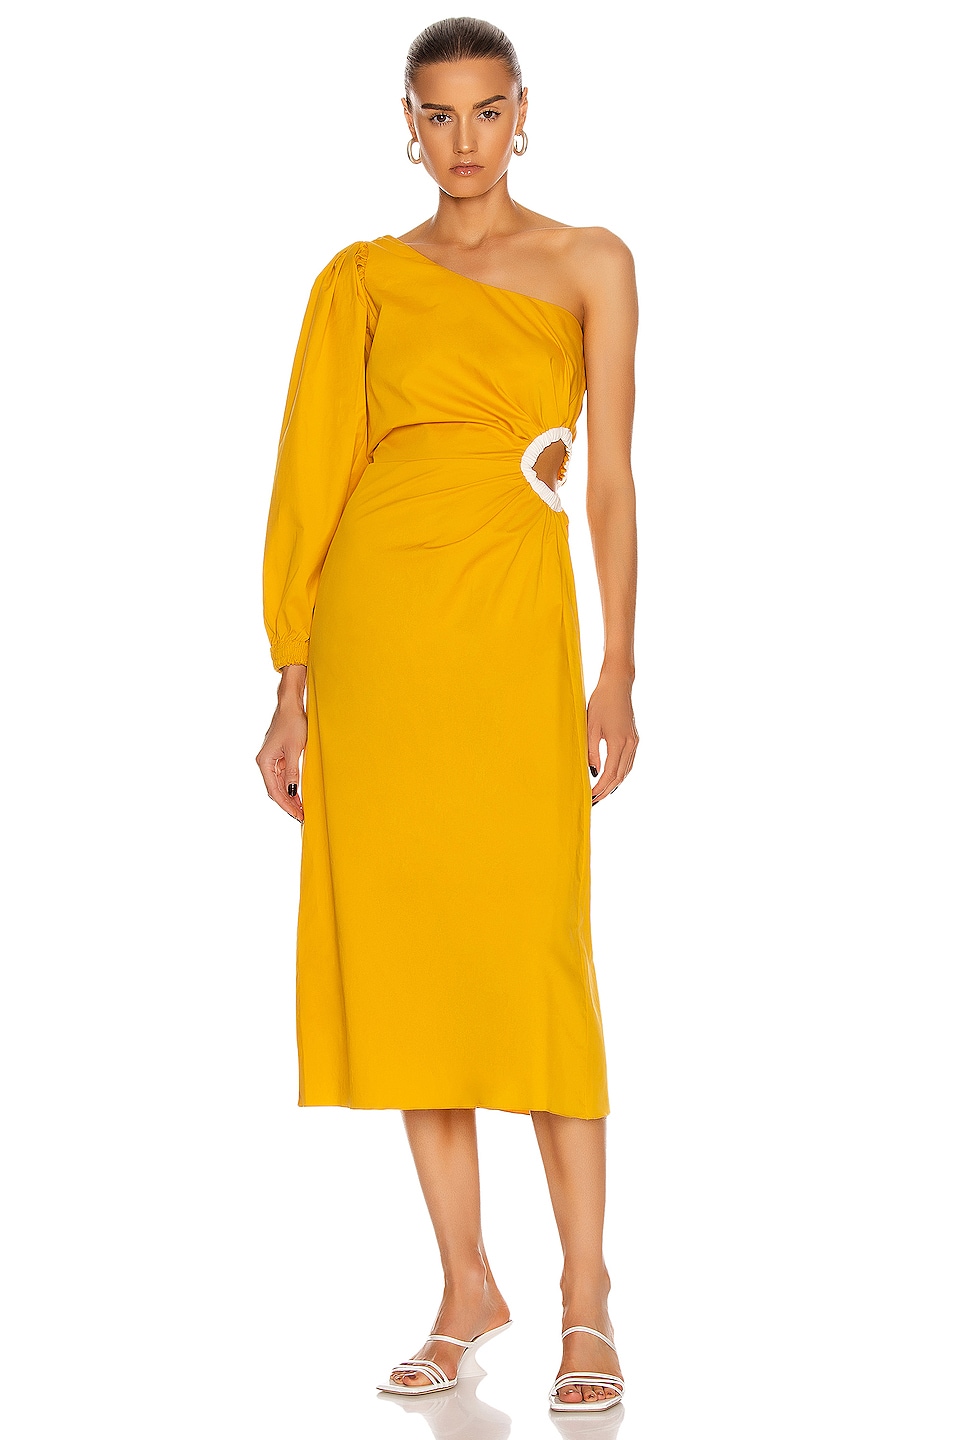 Johanna Ortiz Refulgence of Stars Midi Dress in Yellow Ochre | FWRD